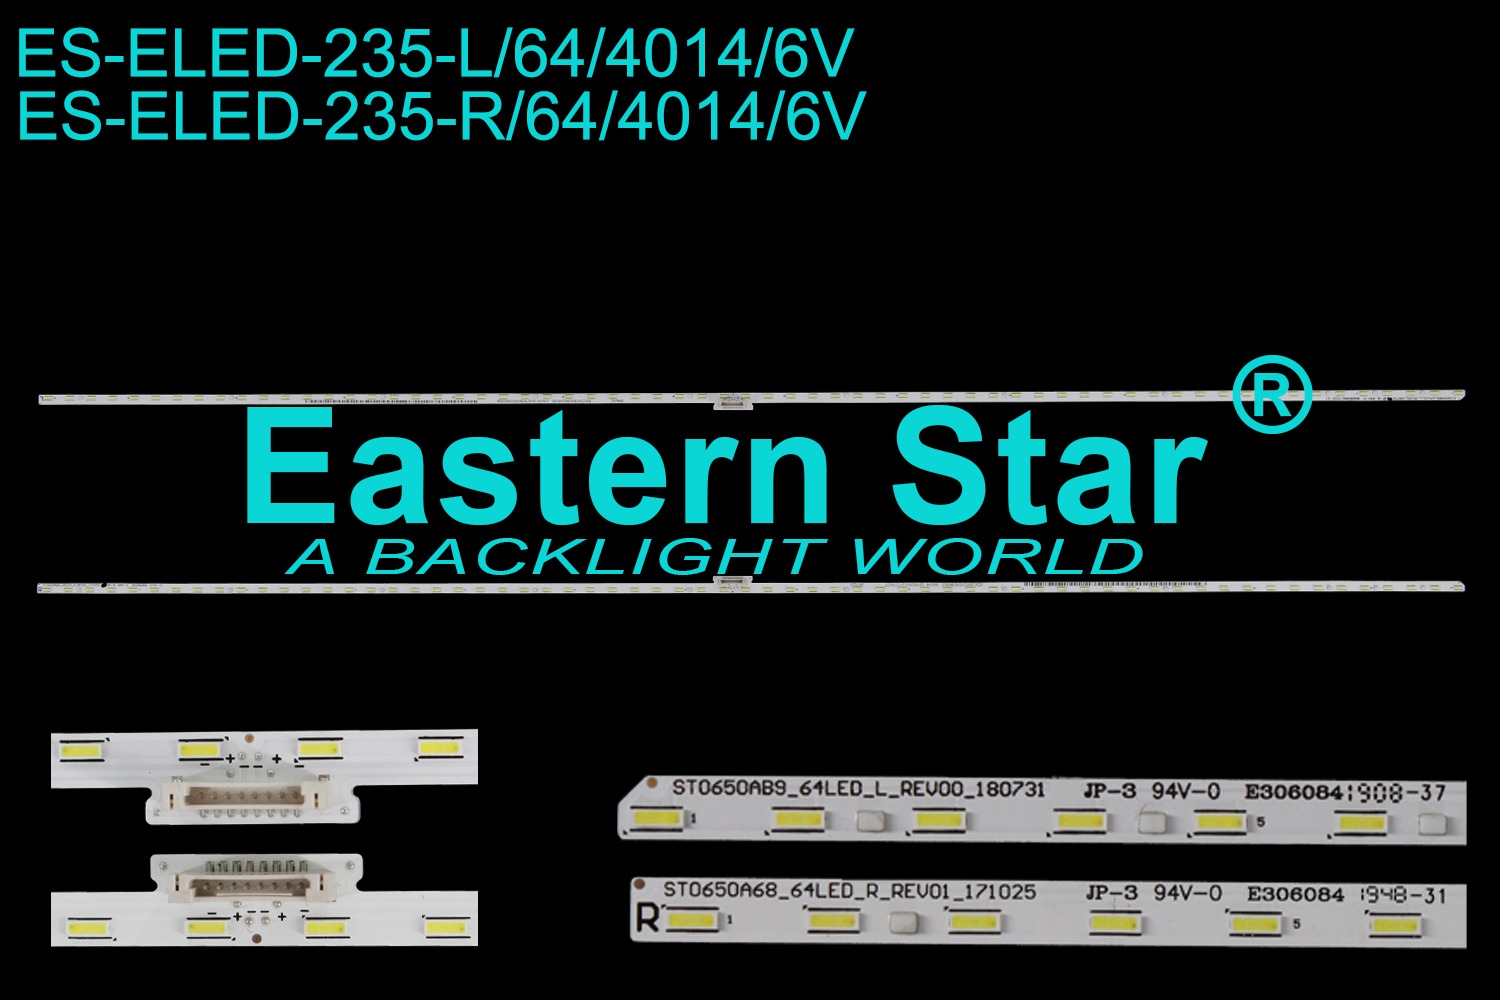 ES-ELED-235 ELED/EGDE TV Backlight 65" Sony XBR-65X850E L:STO650A68_64LED_L_REV01_171025 R:STO650A68_64LED_R_REV01_171025 (2)